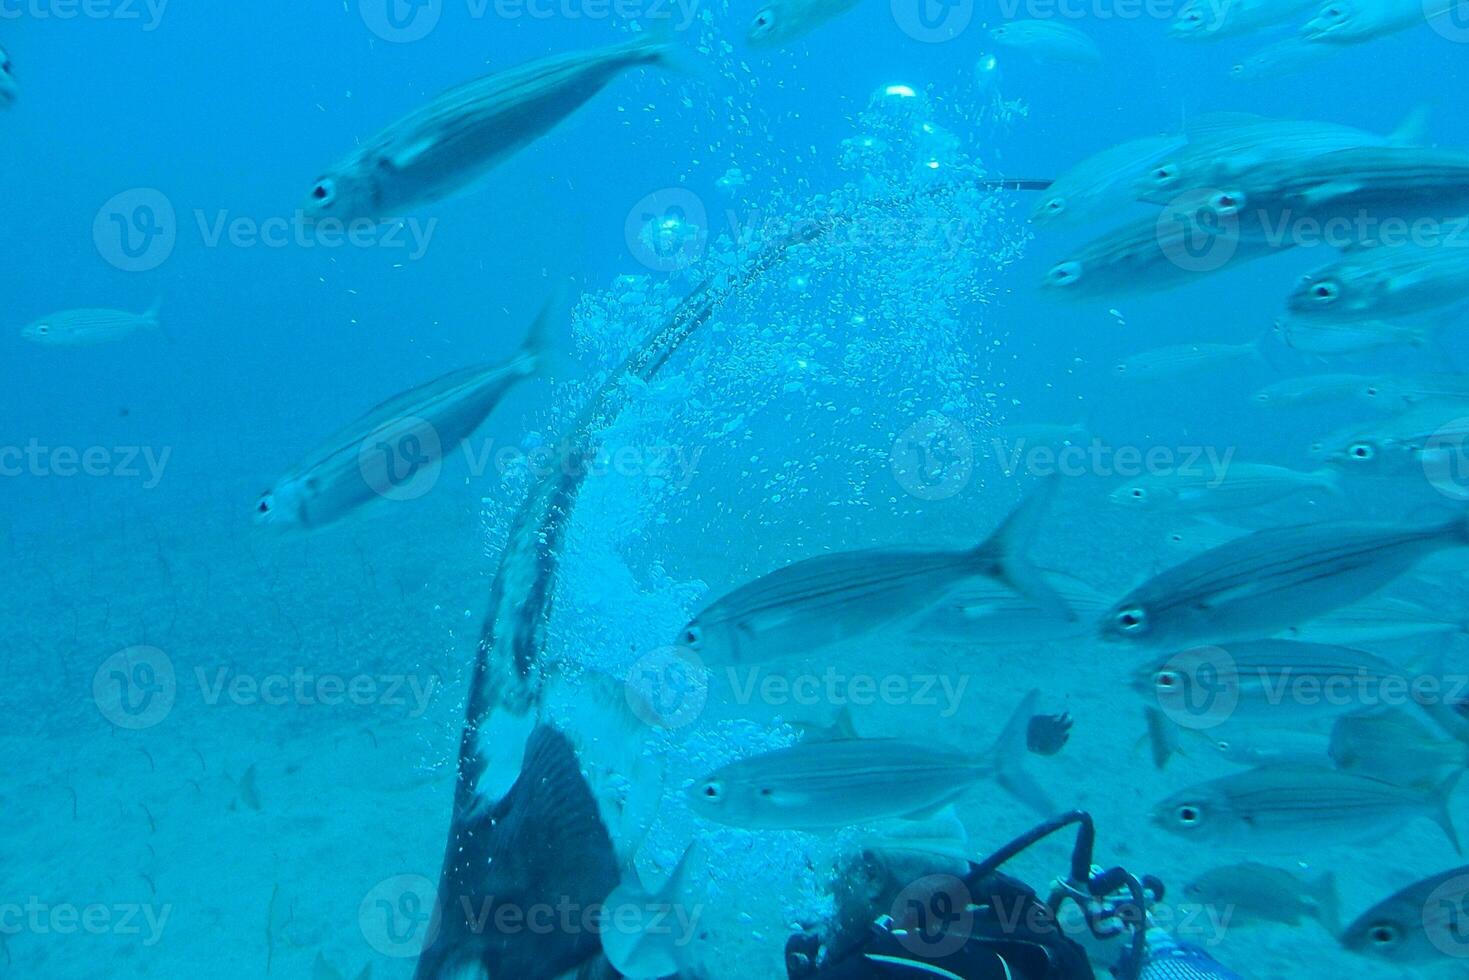 quieto calma submarino mundo com peixe vivo dentro a atlântico oceano foto